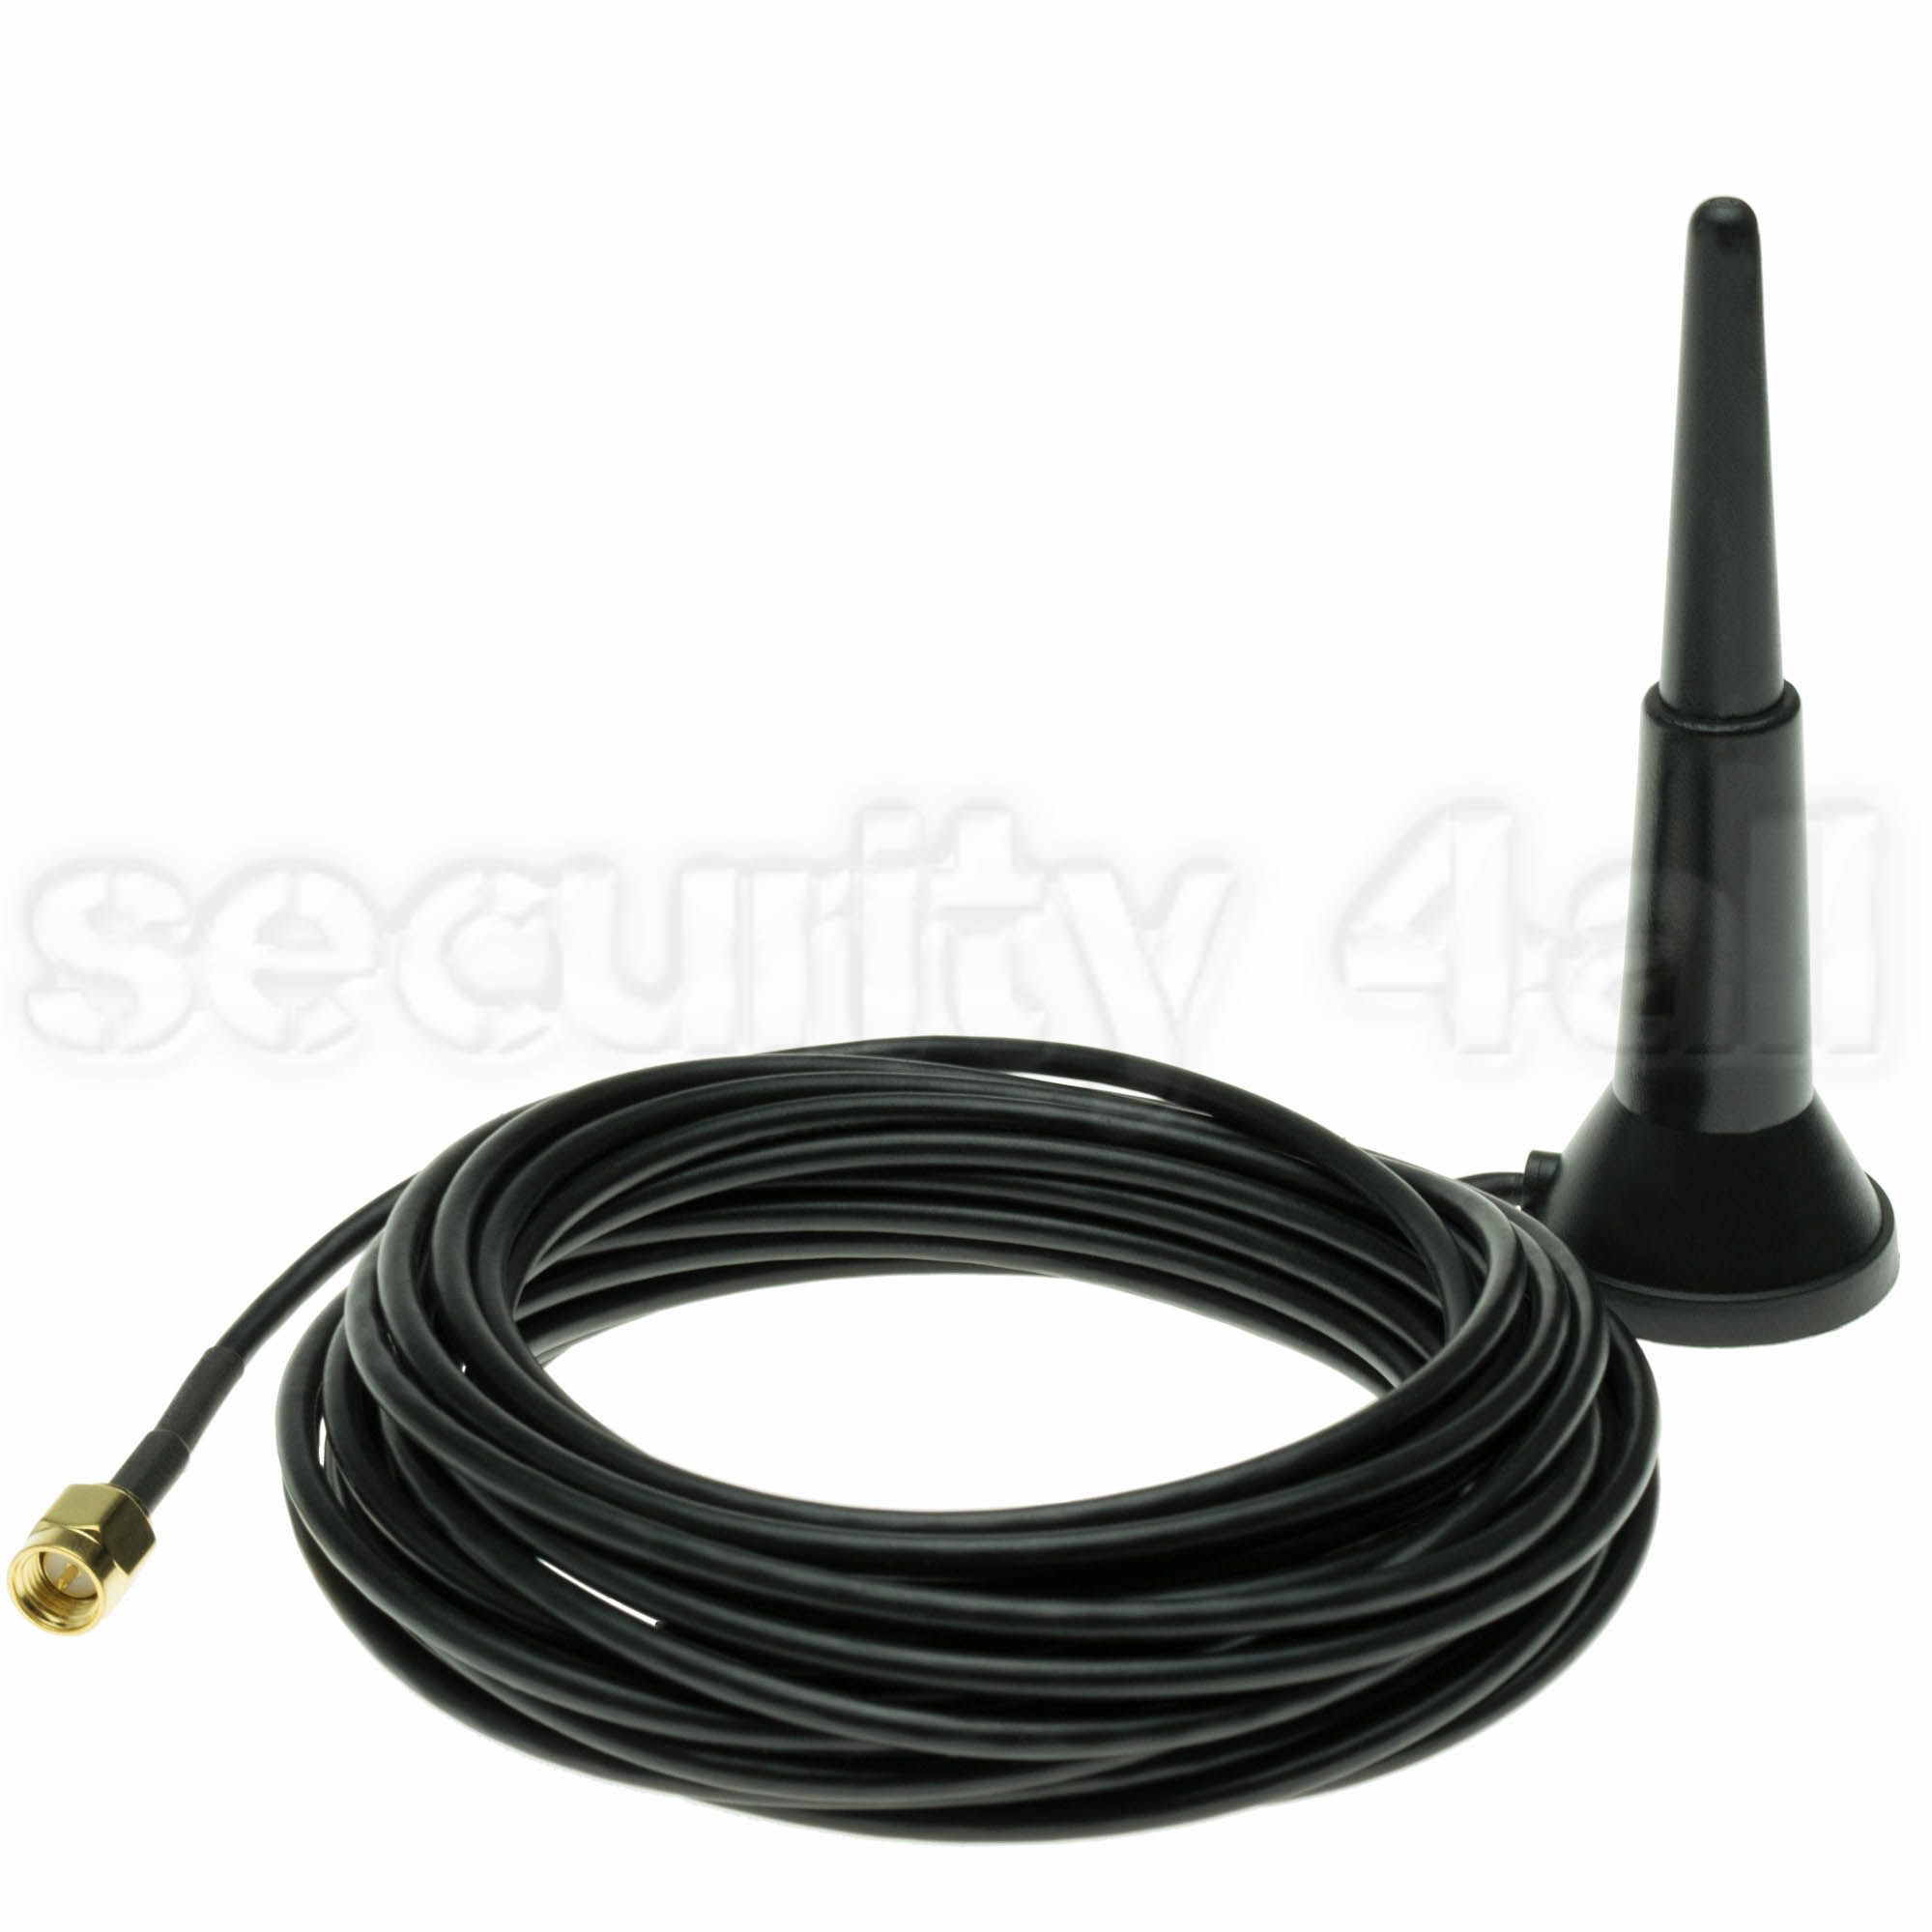 Formulate Improve fuse Antena 2.4 GHz , cablu 6.5m, ANT-3501